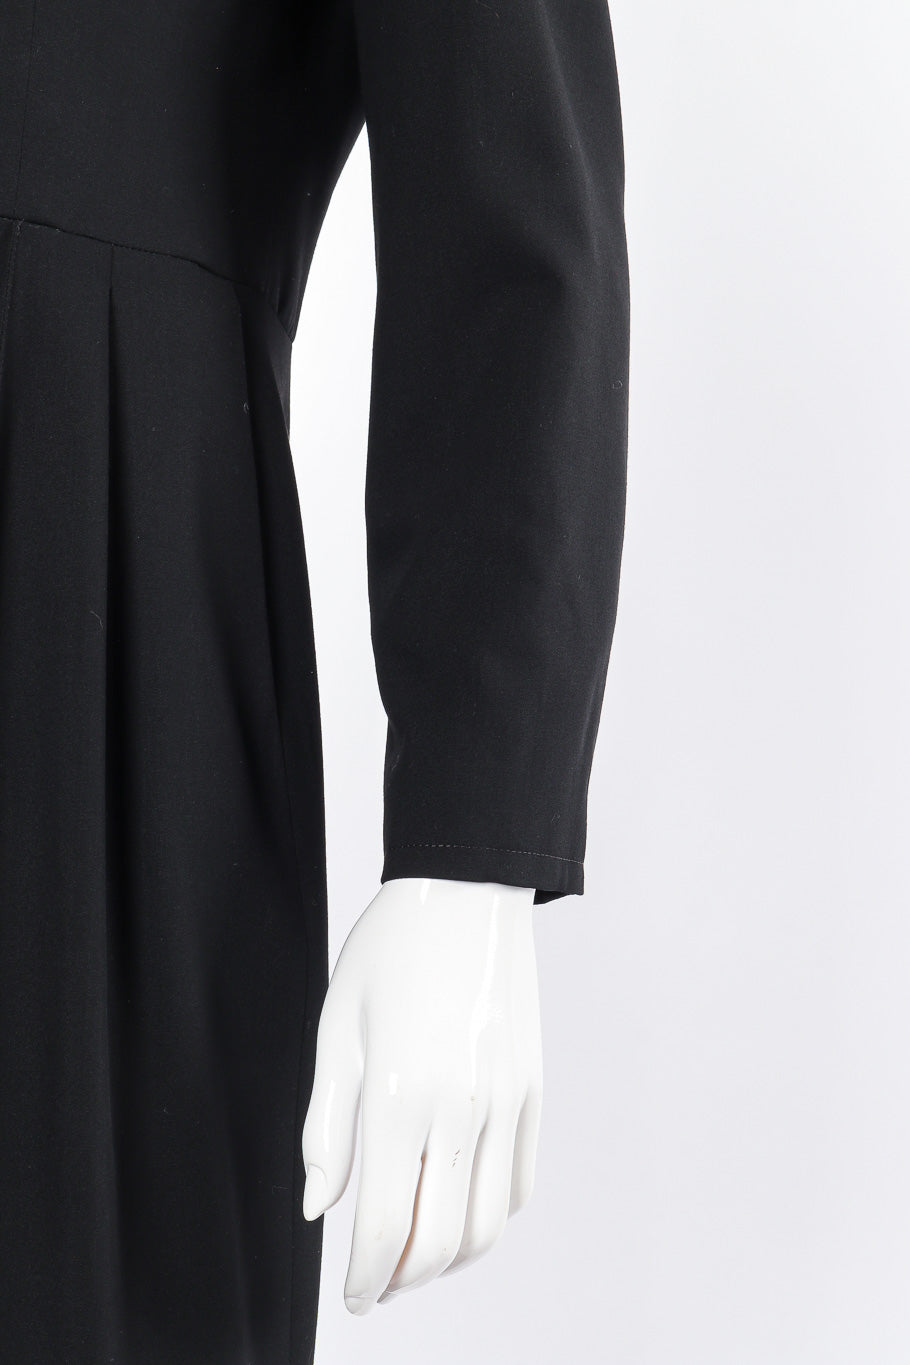 Wool pantsuit by Yves Saint Laurent Rive Gauche on mannequin sleeve @recessla